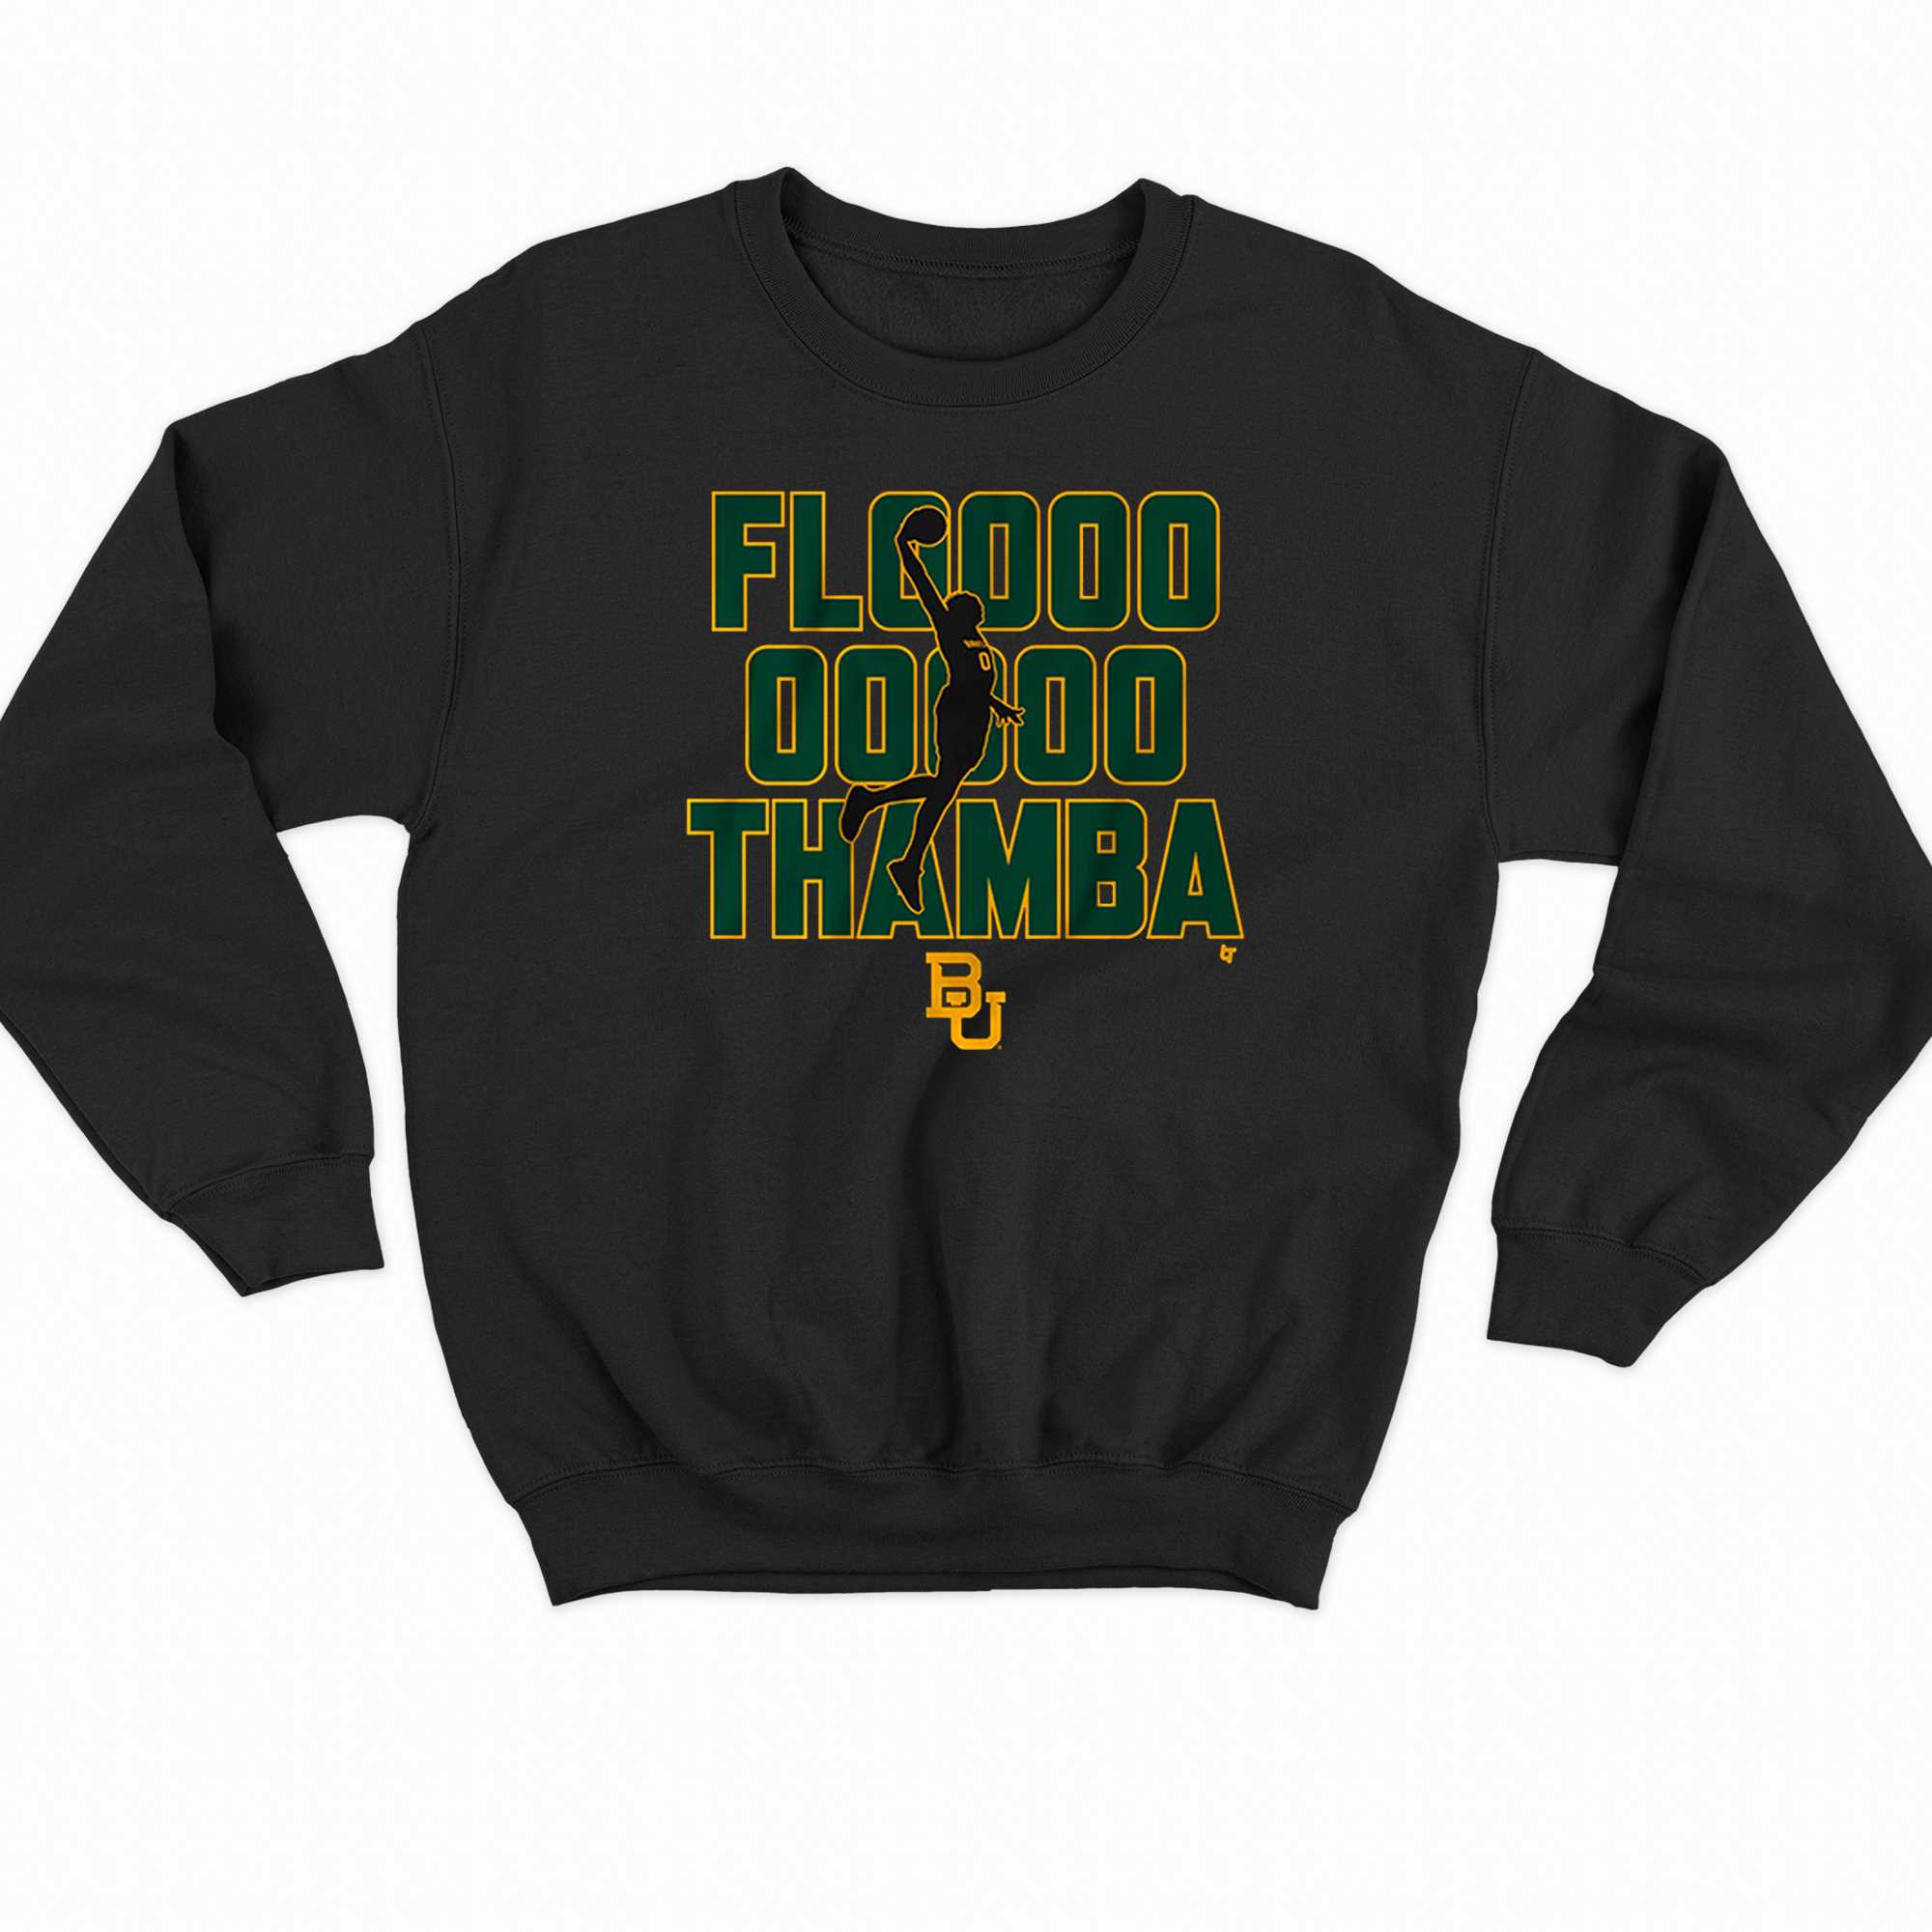 Baylor Basketball Flooooo Thamba T-shirt 